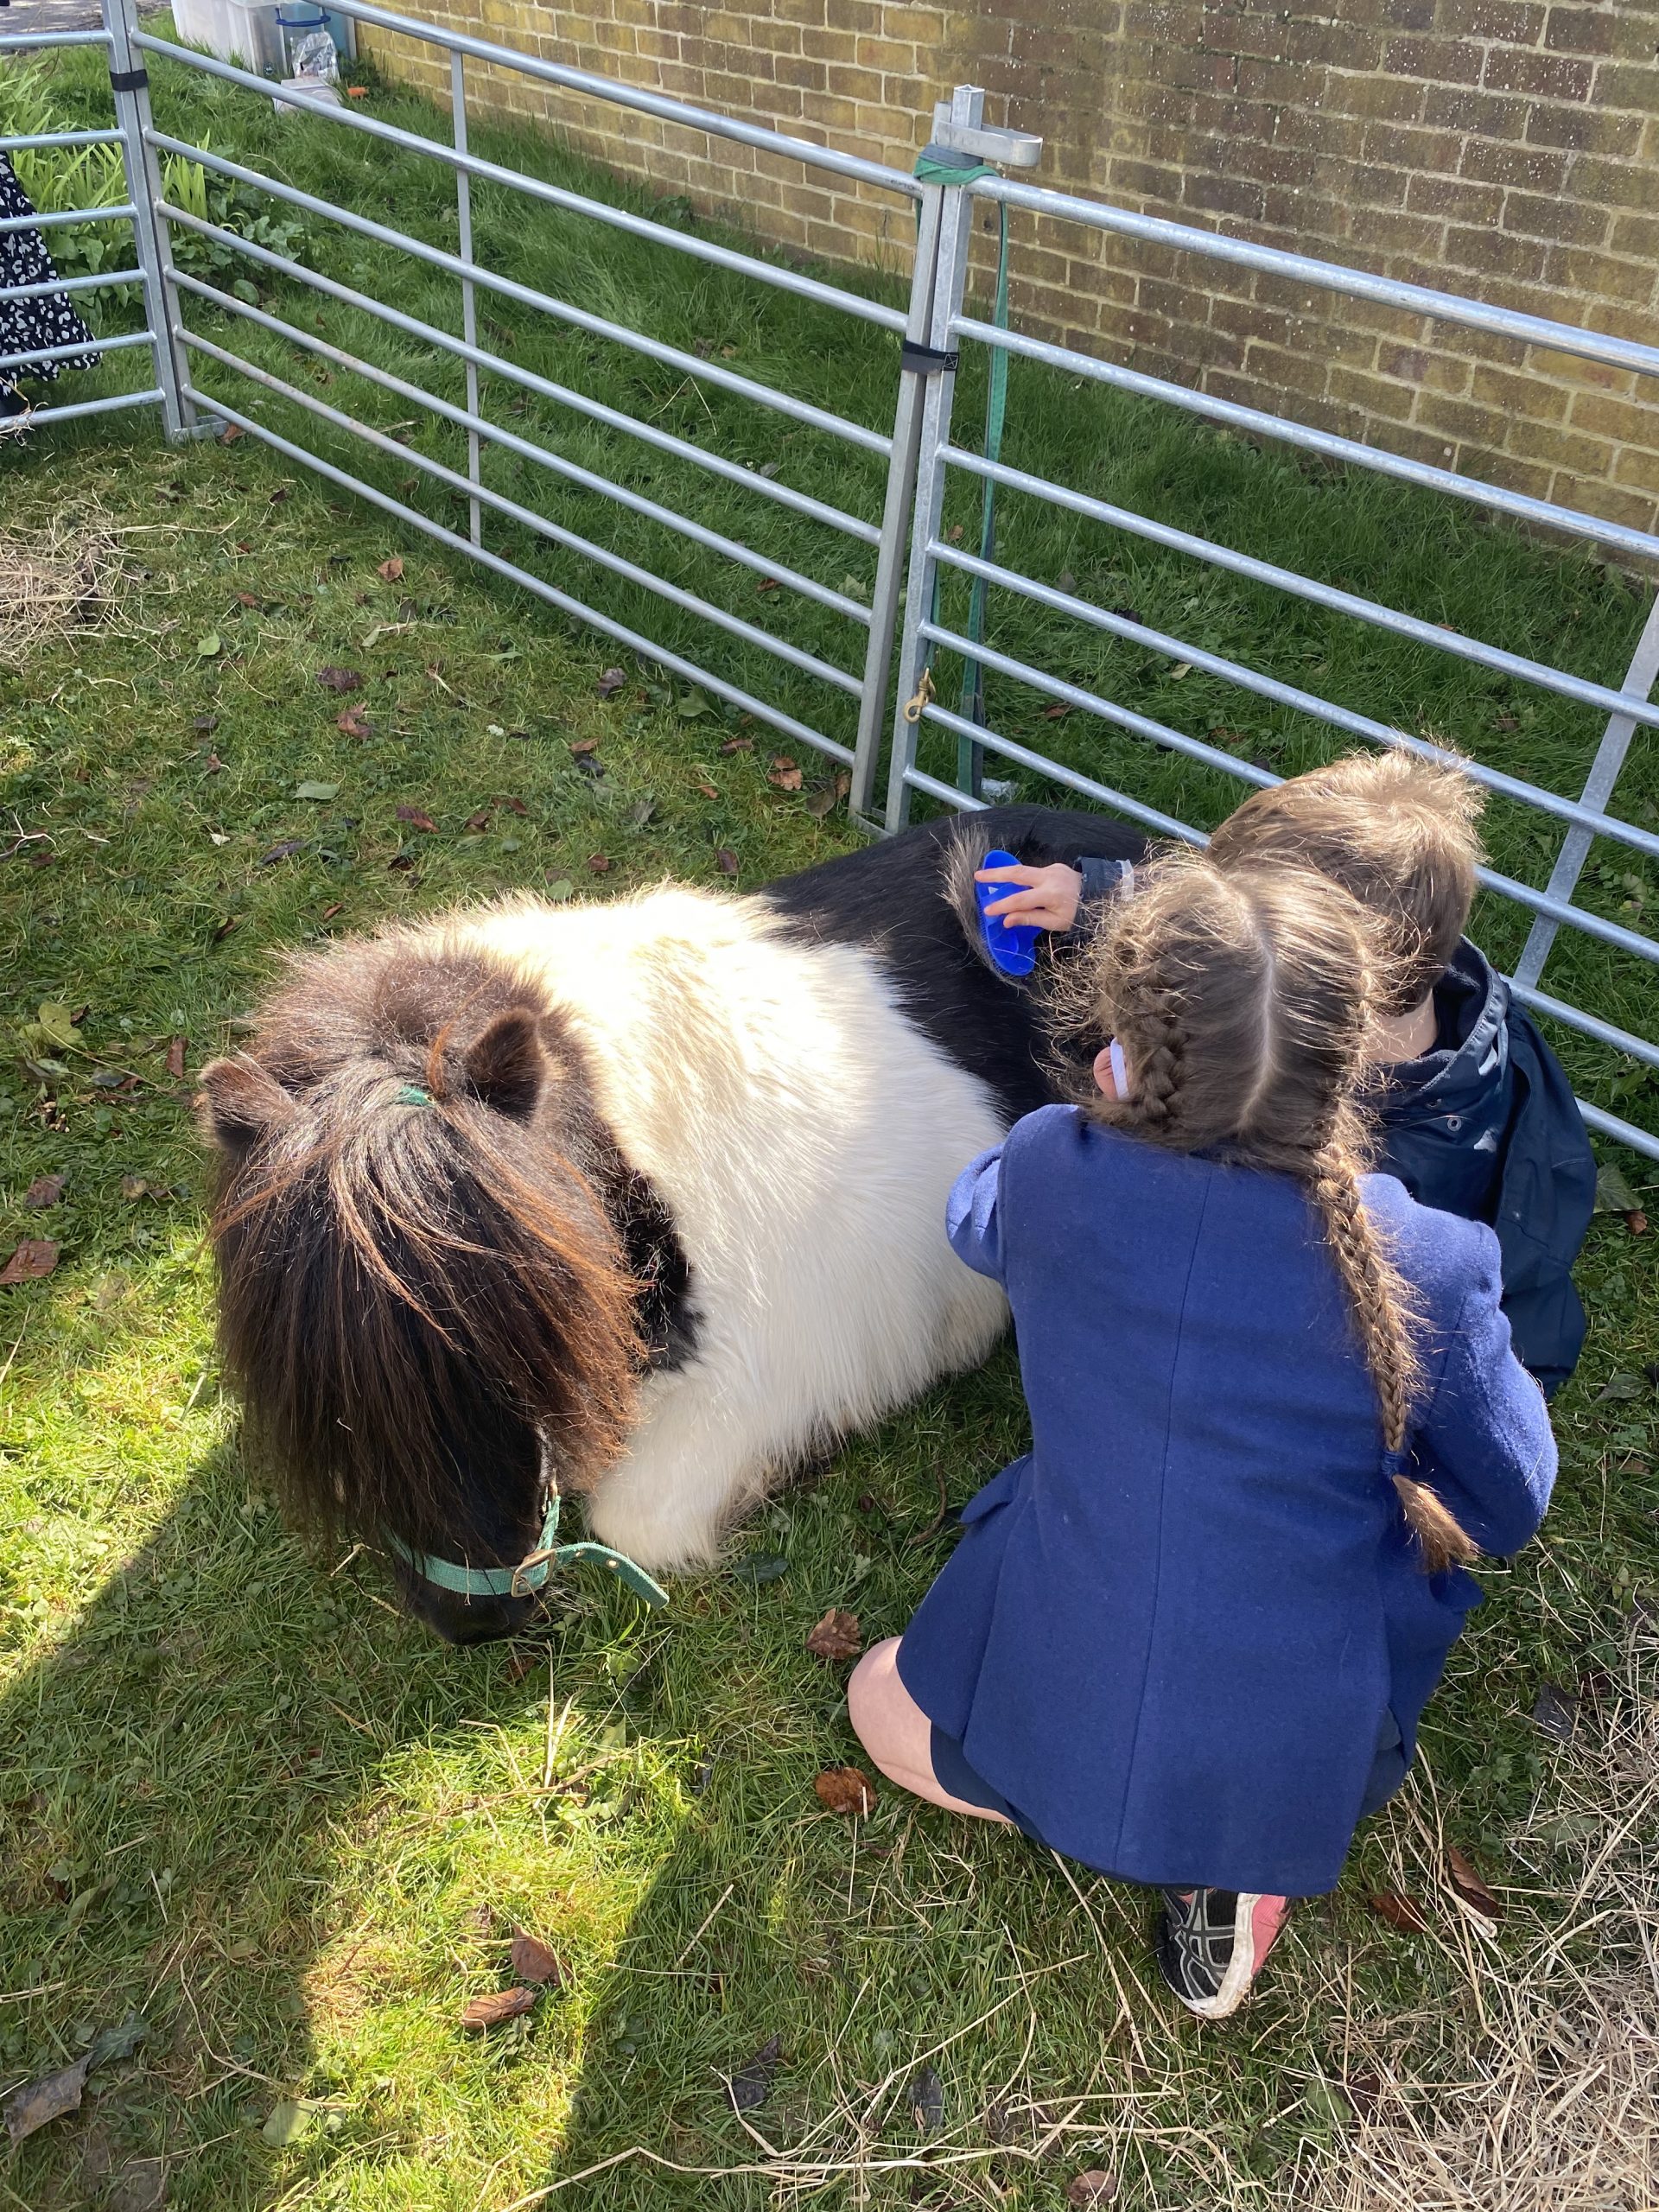 Rookwood school students on a school trip brushing a shetland pony.